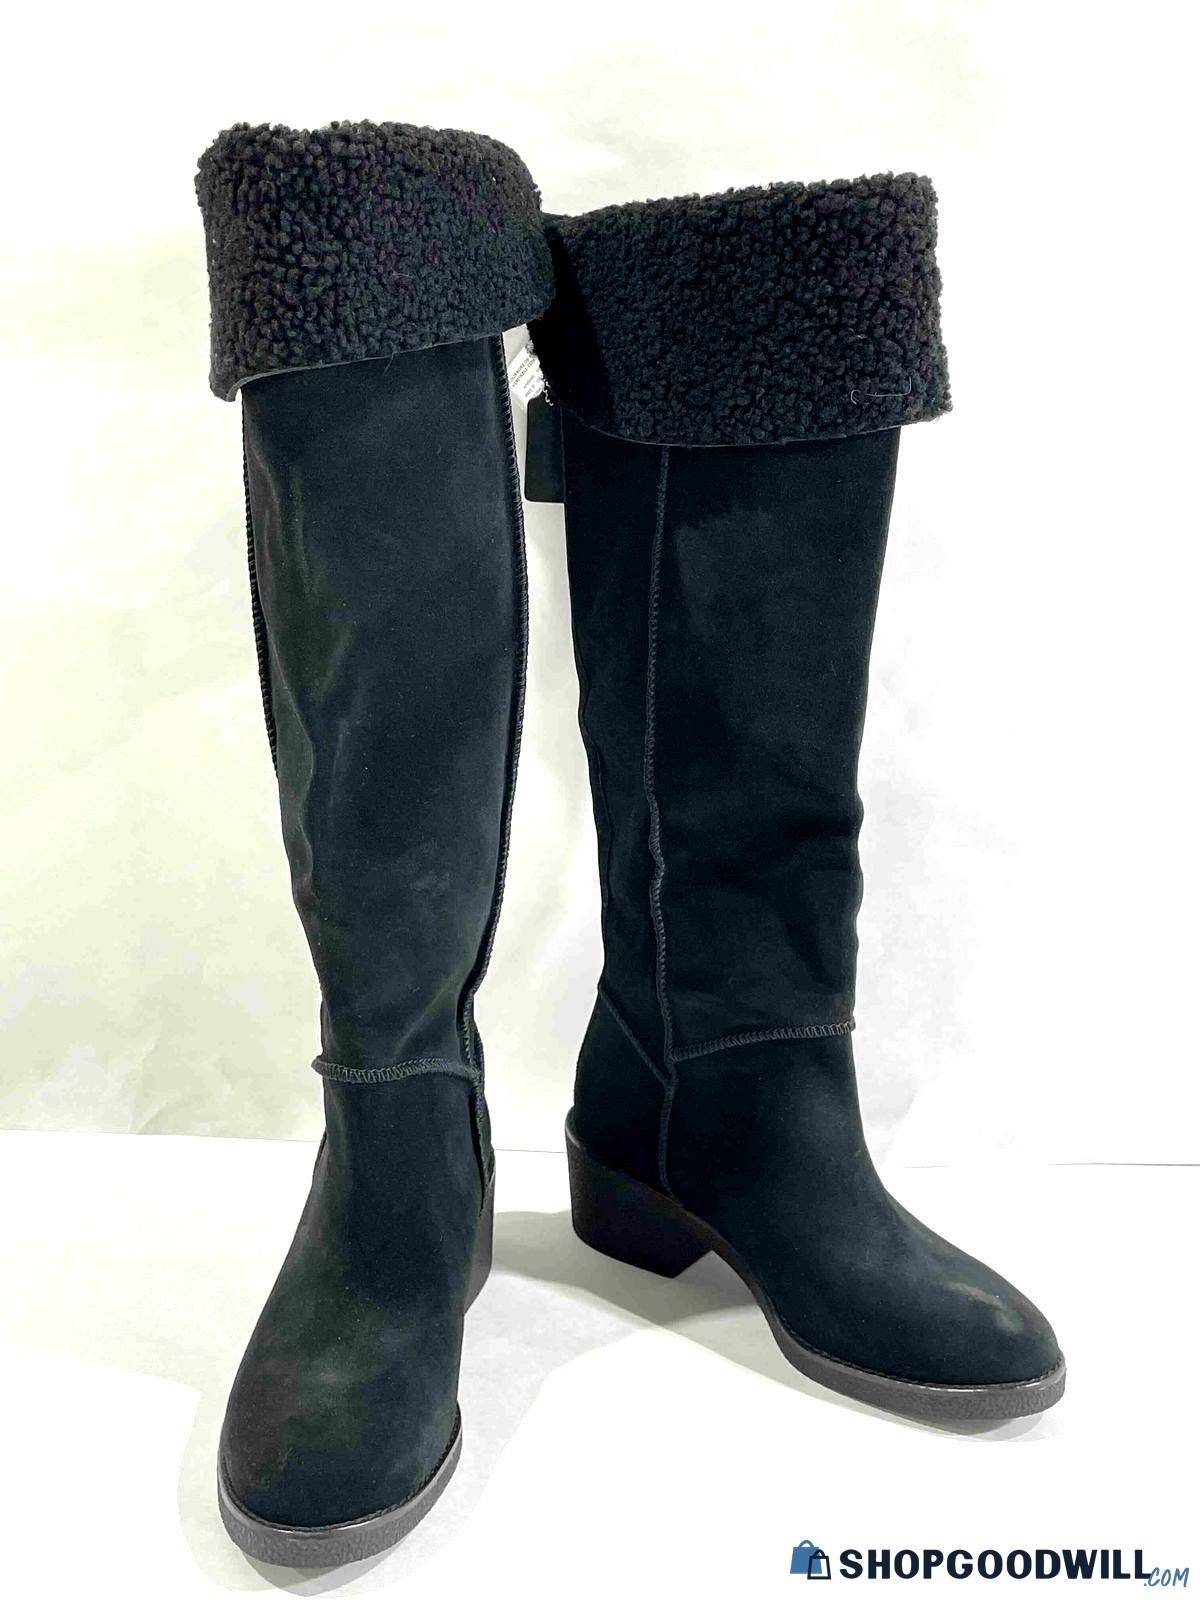 COACH Knee High Leather & Sheep Fur Boots Size 7B - shopgoodwill.com